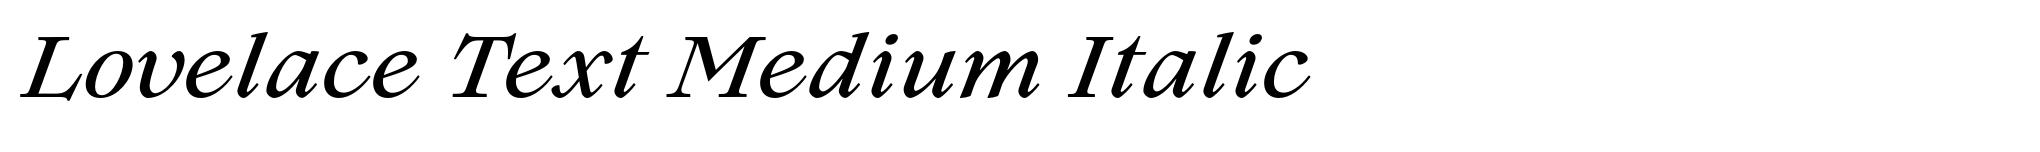 Lovelace Text Medium Italic image